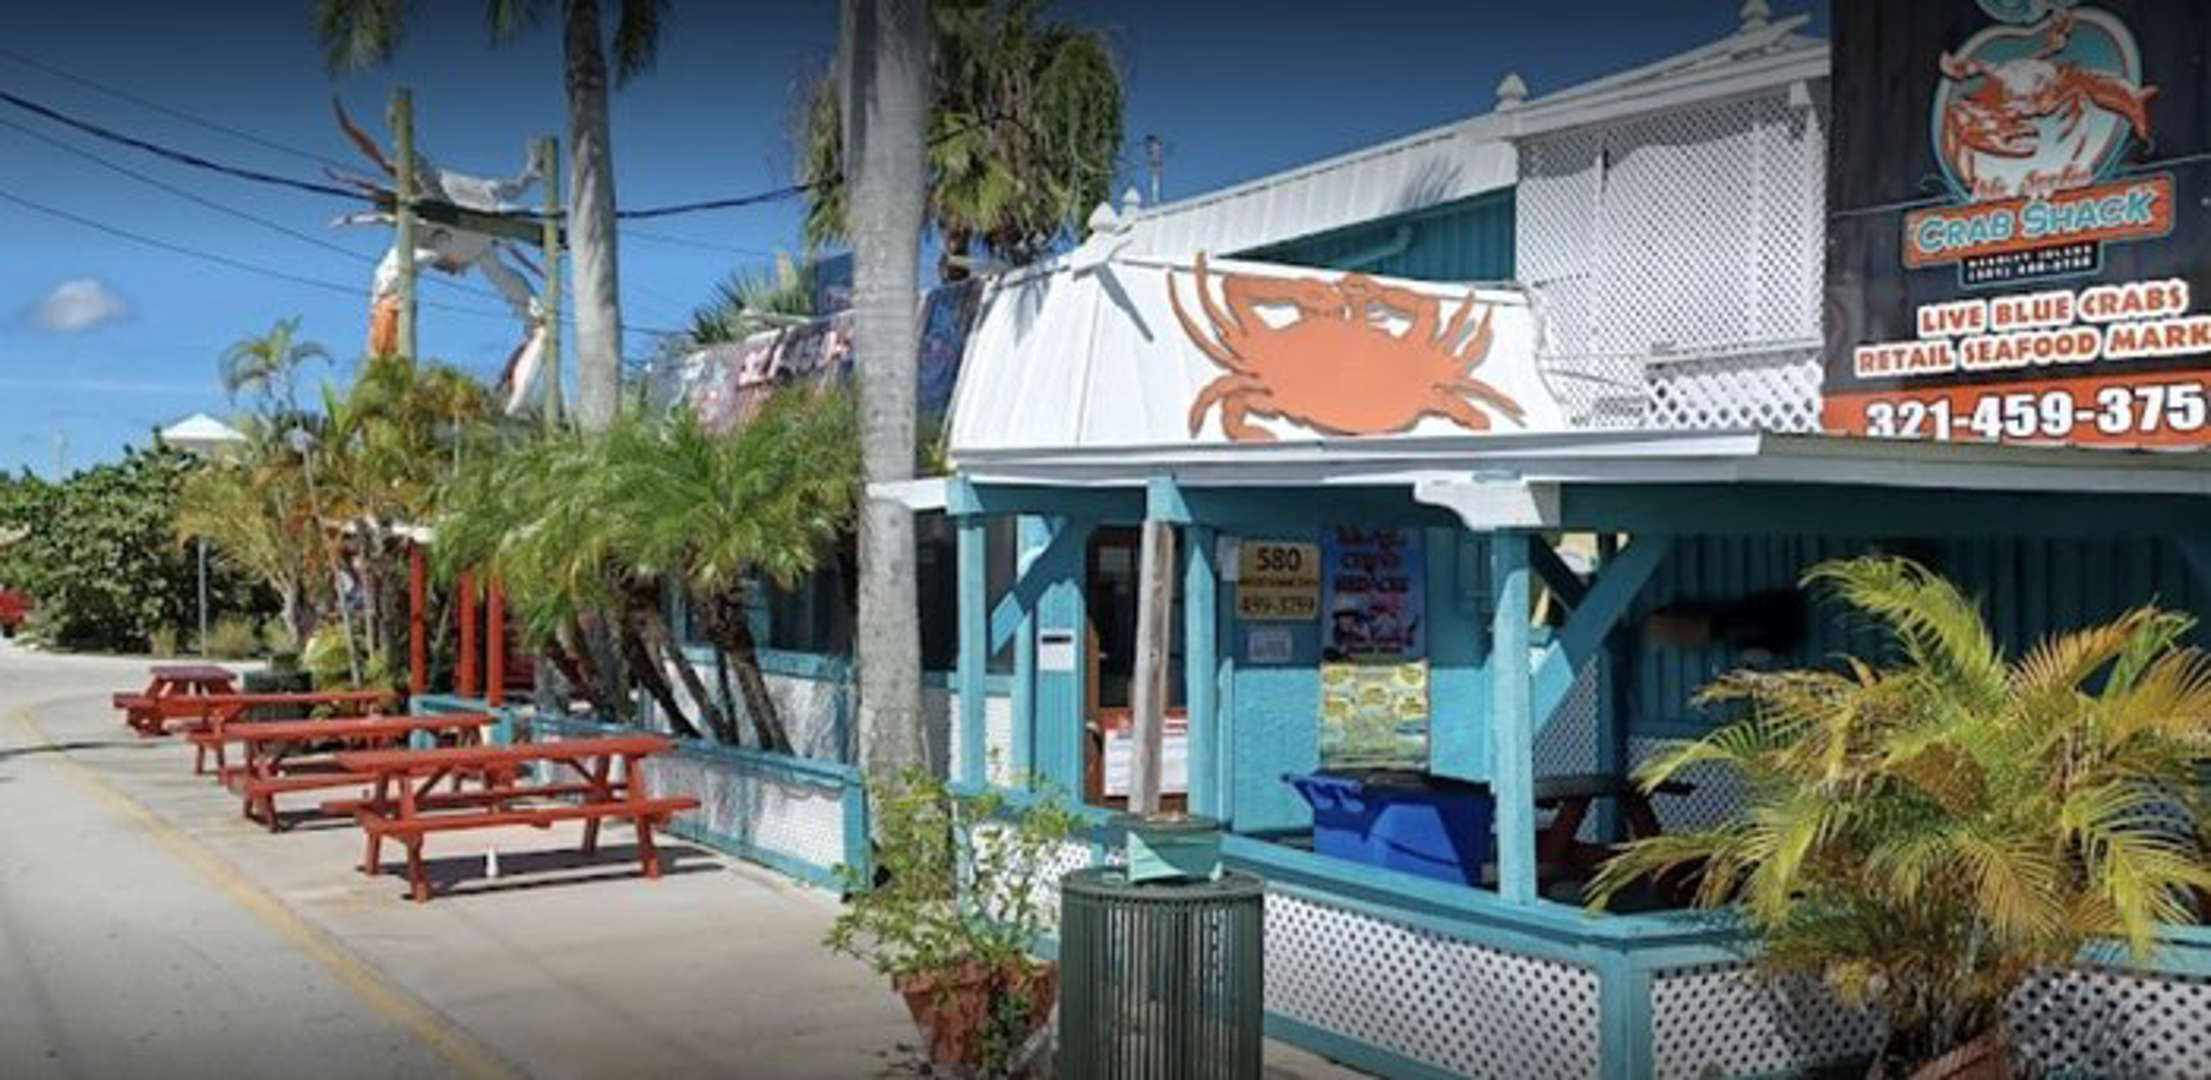 Outside image of Ms. Apples Crab Shack Restaurant.